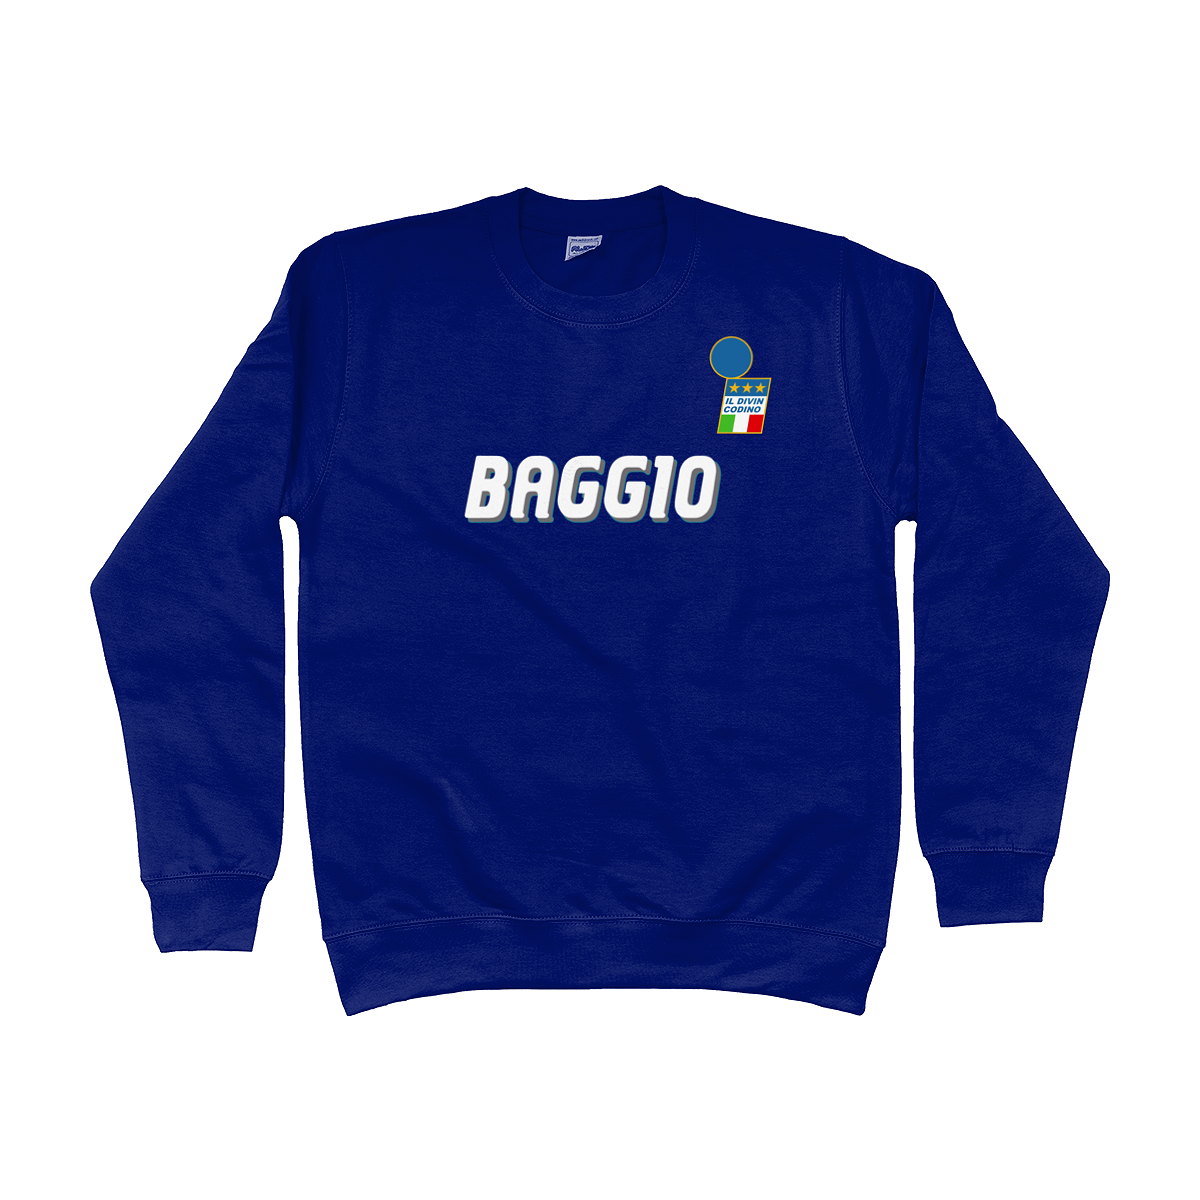 Baggio 1994 Sweatshirt